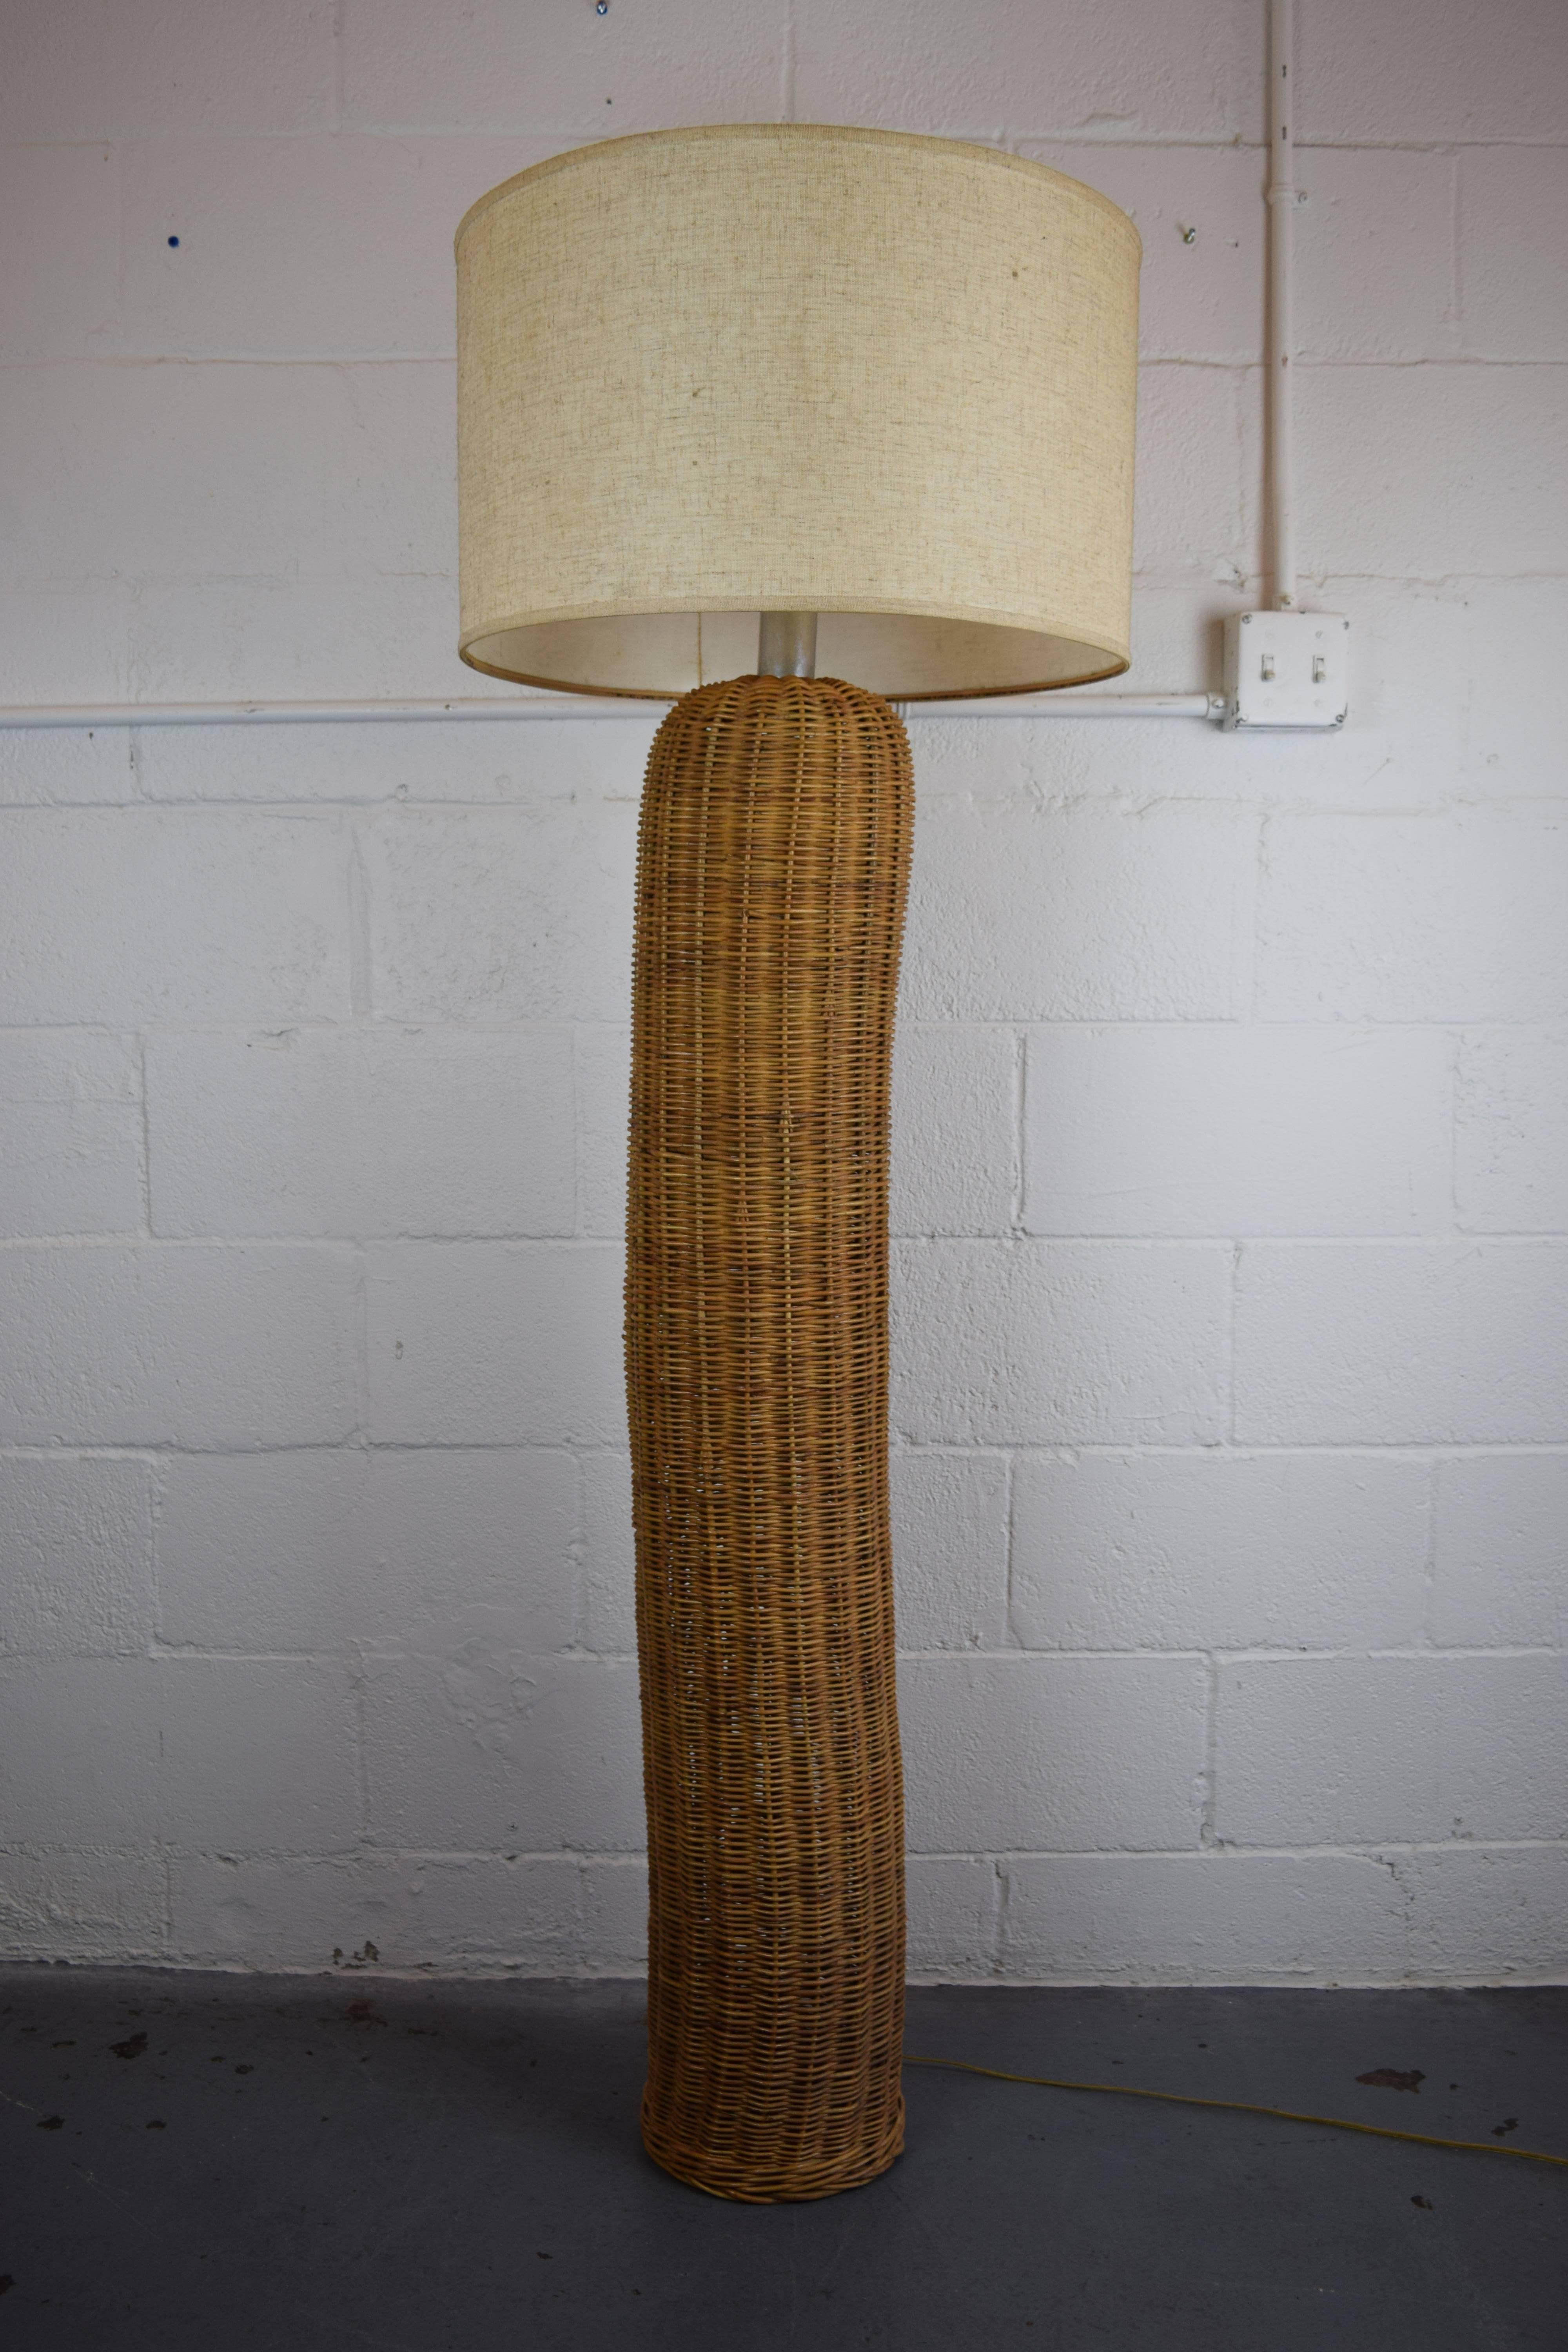 Tony Paul biomorphic floor lamp for Raymor. Three stage lamp.
Total lamp height: 60